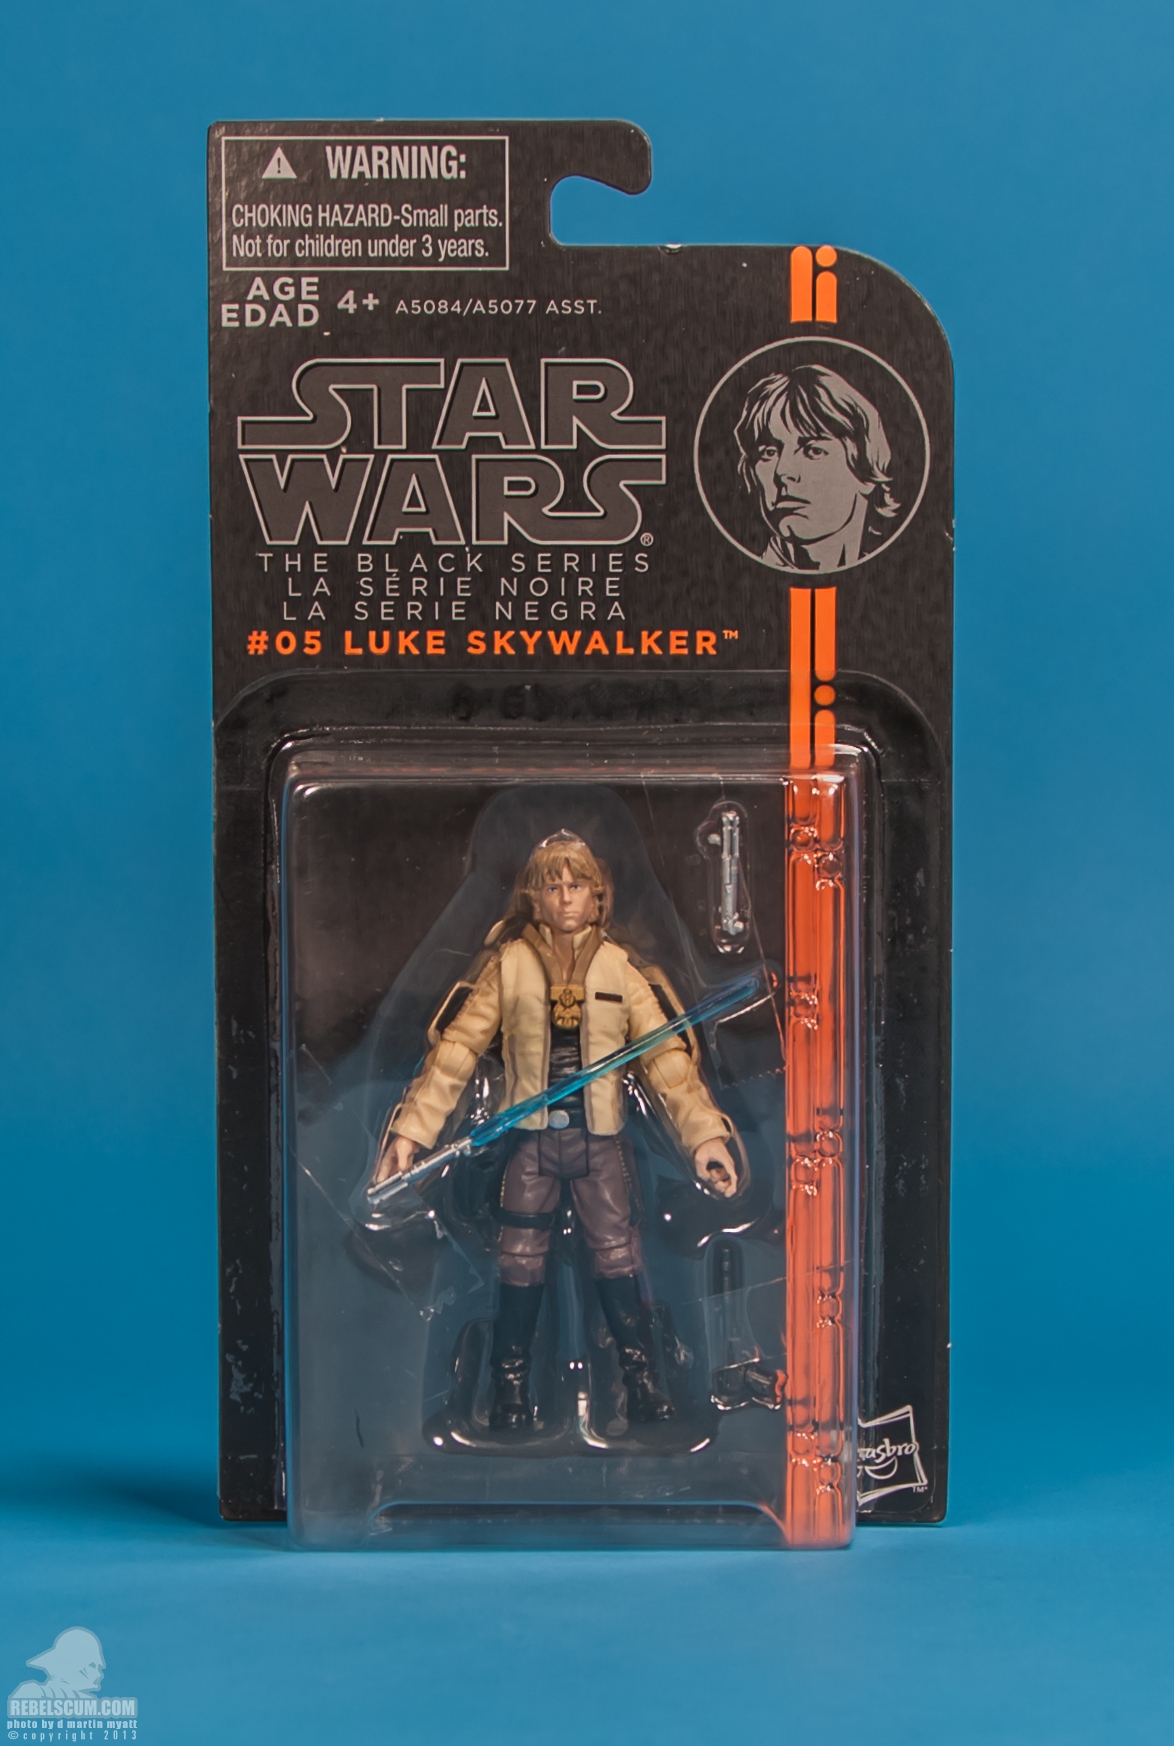 The-Black-Series-Star-Wars-Hasbro-05-Luke-Skywalker-022.jpg